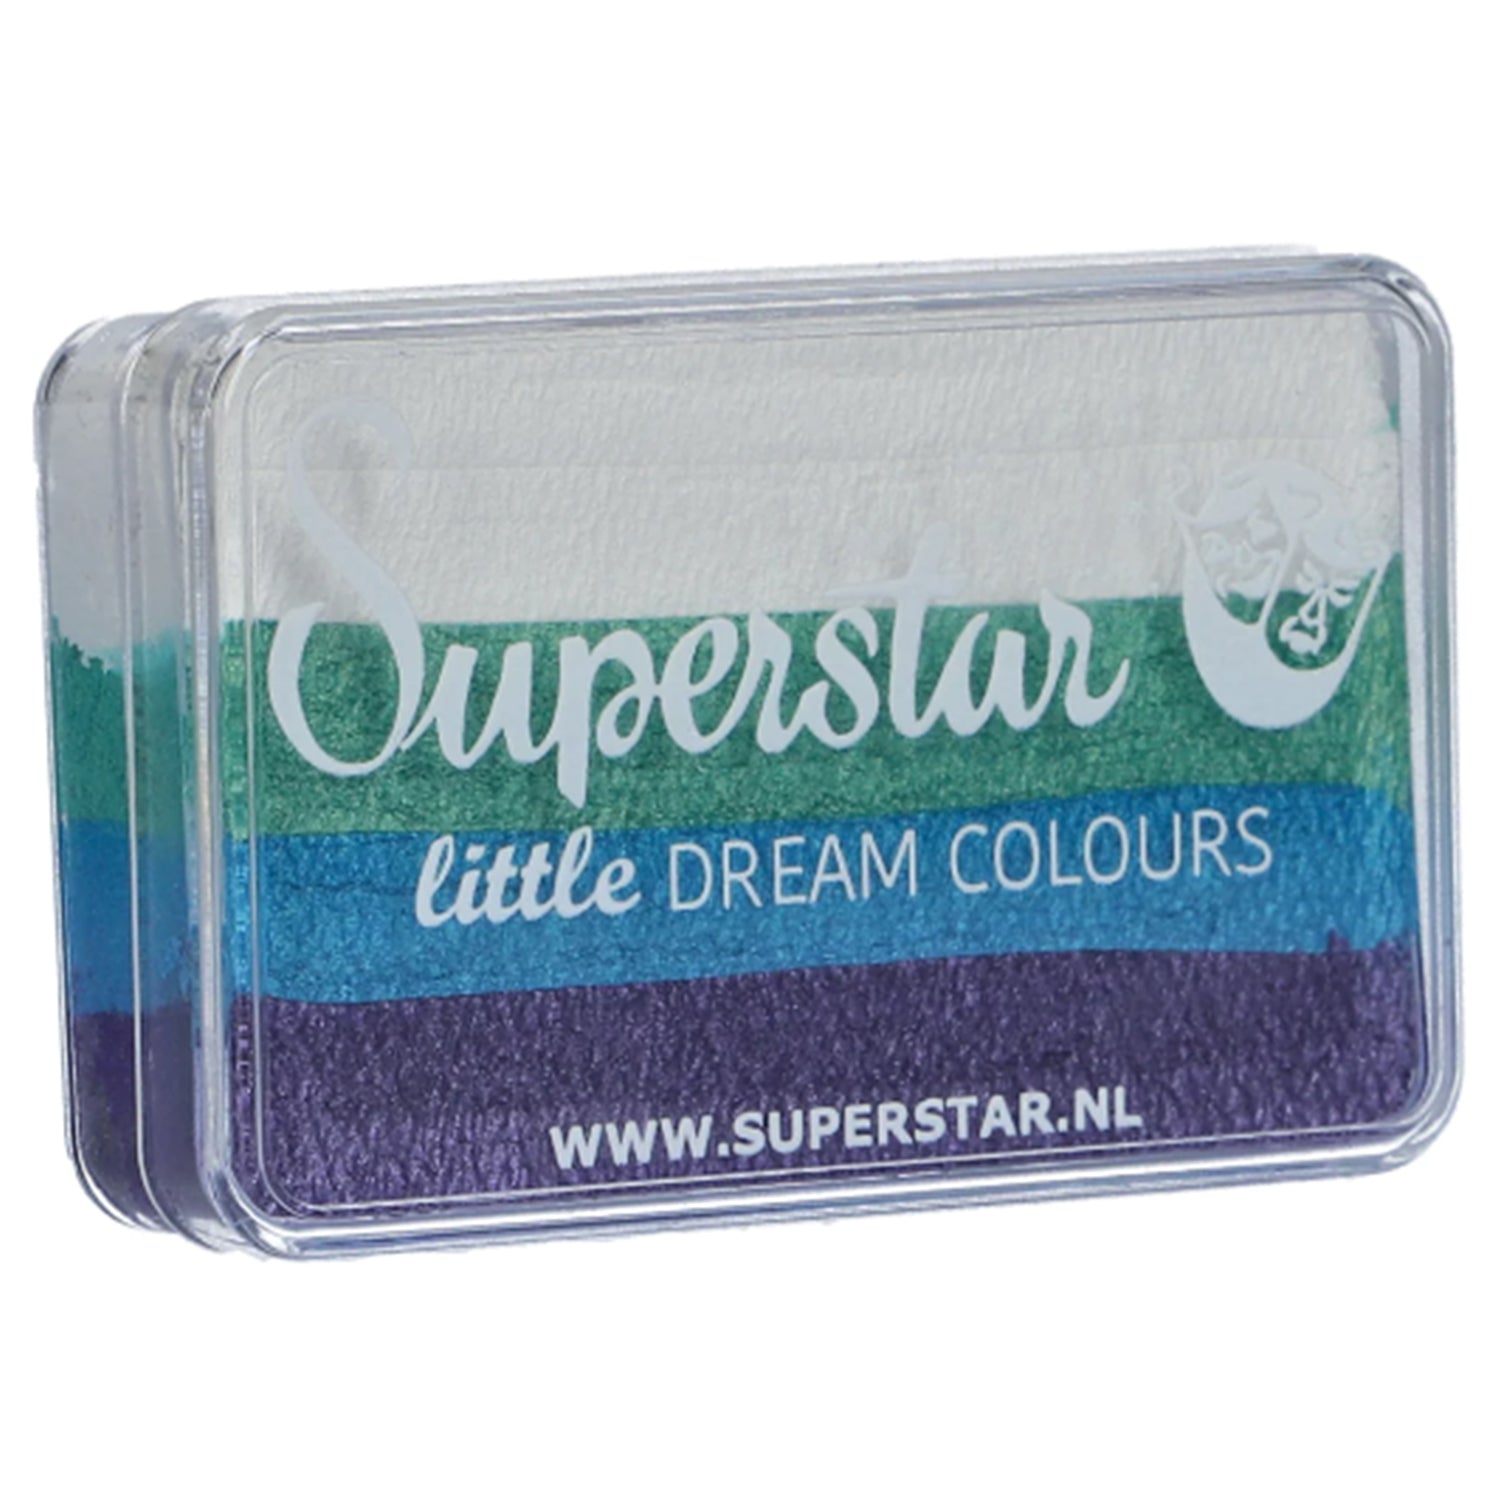 Superstar Dream Colours Rainbow Cake - Little Mermaid (1.06 oz/30 gm)